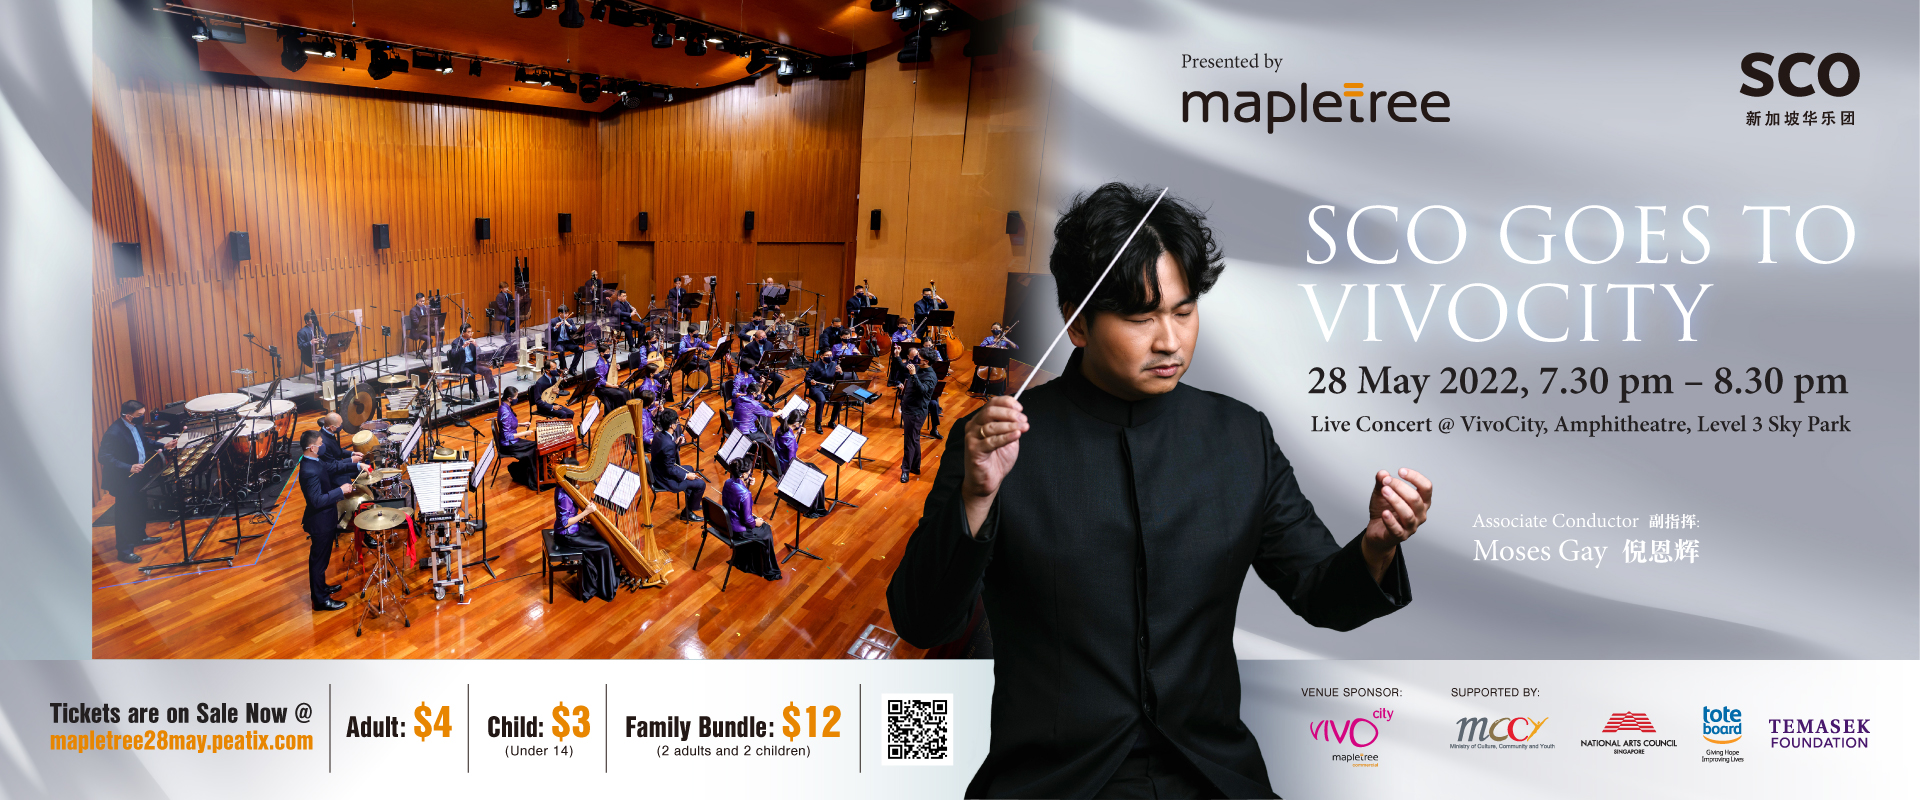 SCO_Mapletree_Concert_1920x800_3 Outreach & Education